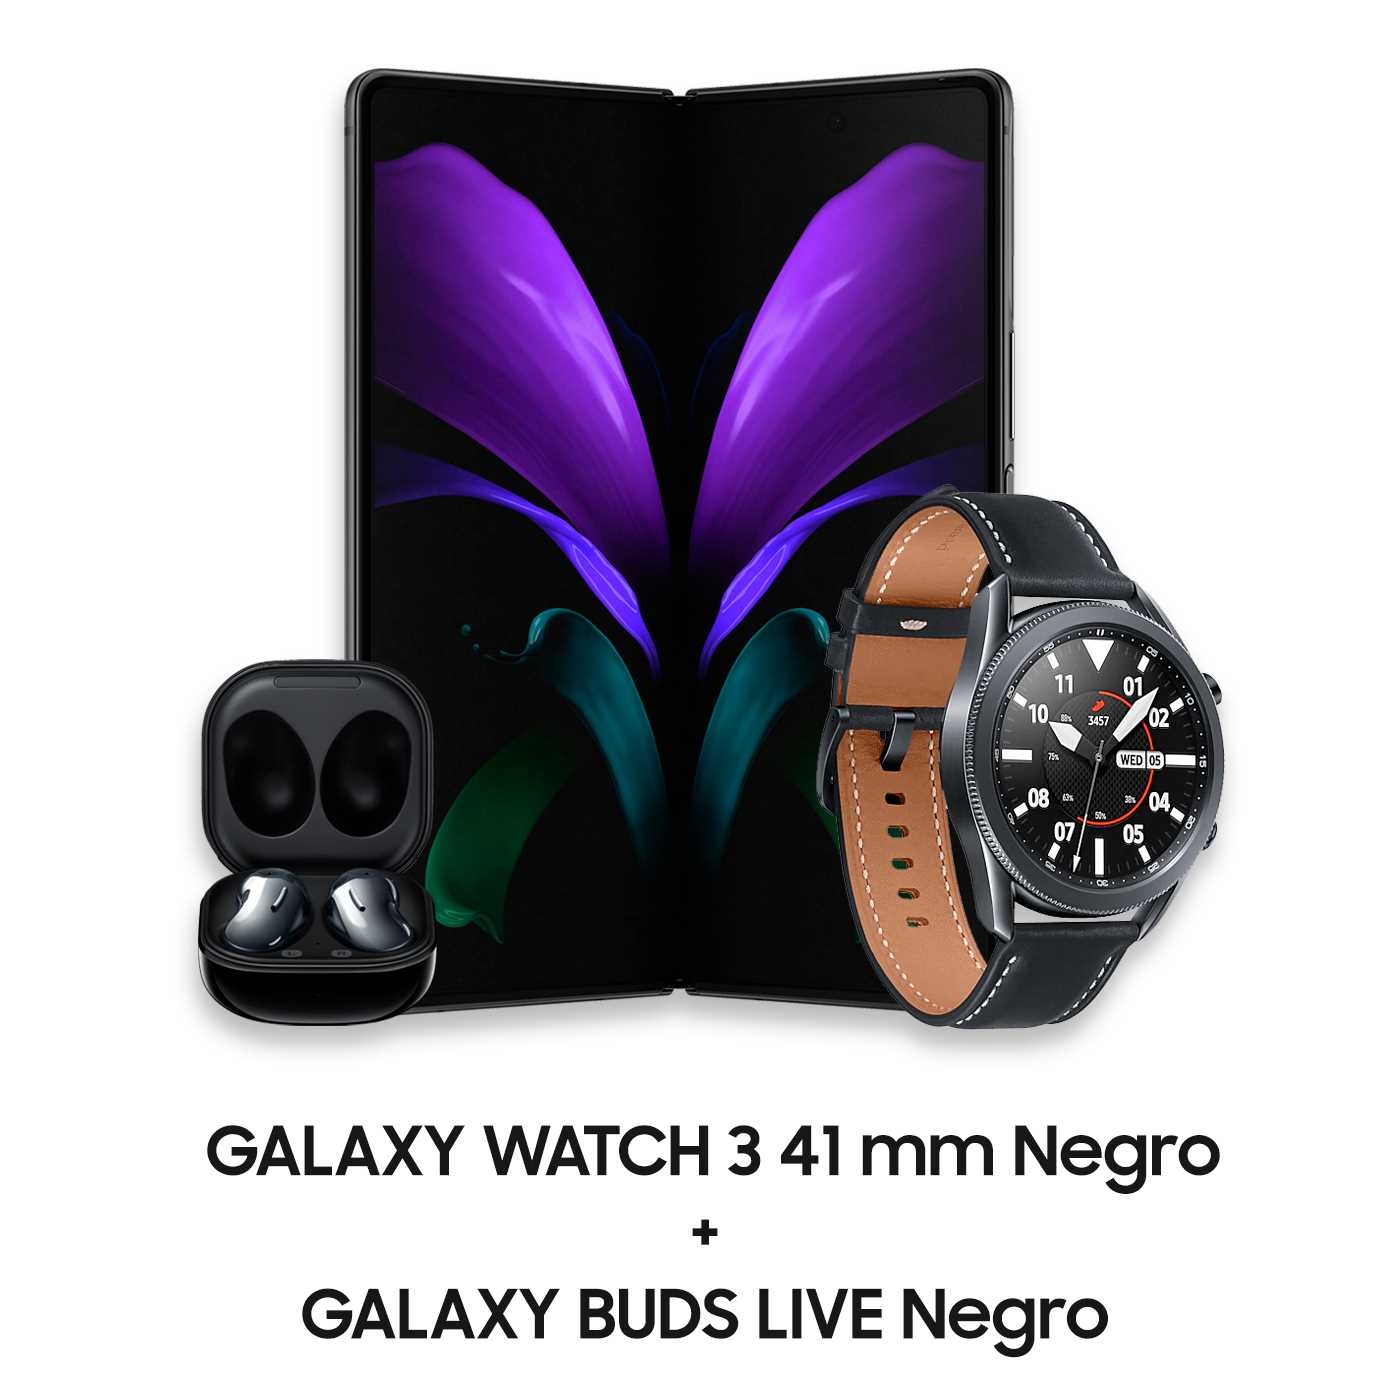 Celular SAMSUNG Galaxy Z FOLD 2 Negro + Galaxy WATCH 3 41 mm Negro + Galaxy BUDS LIVE Negro